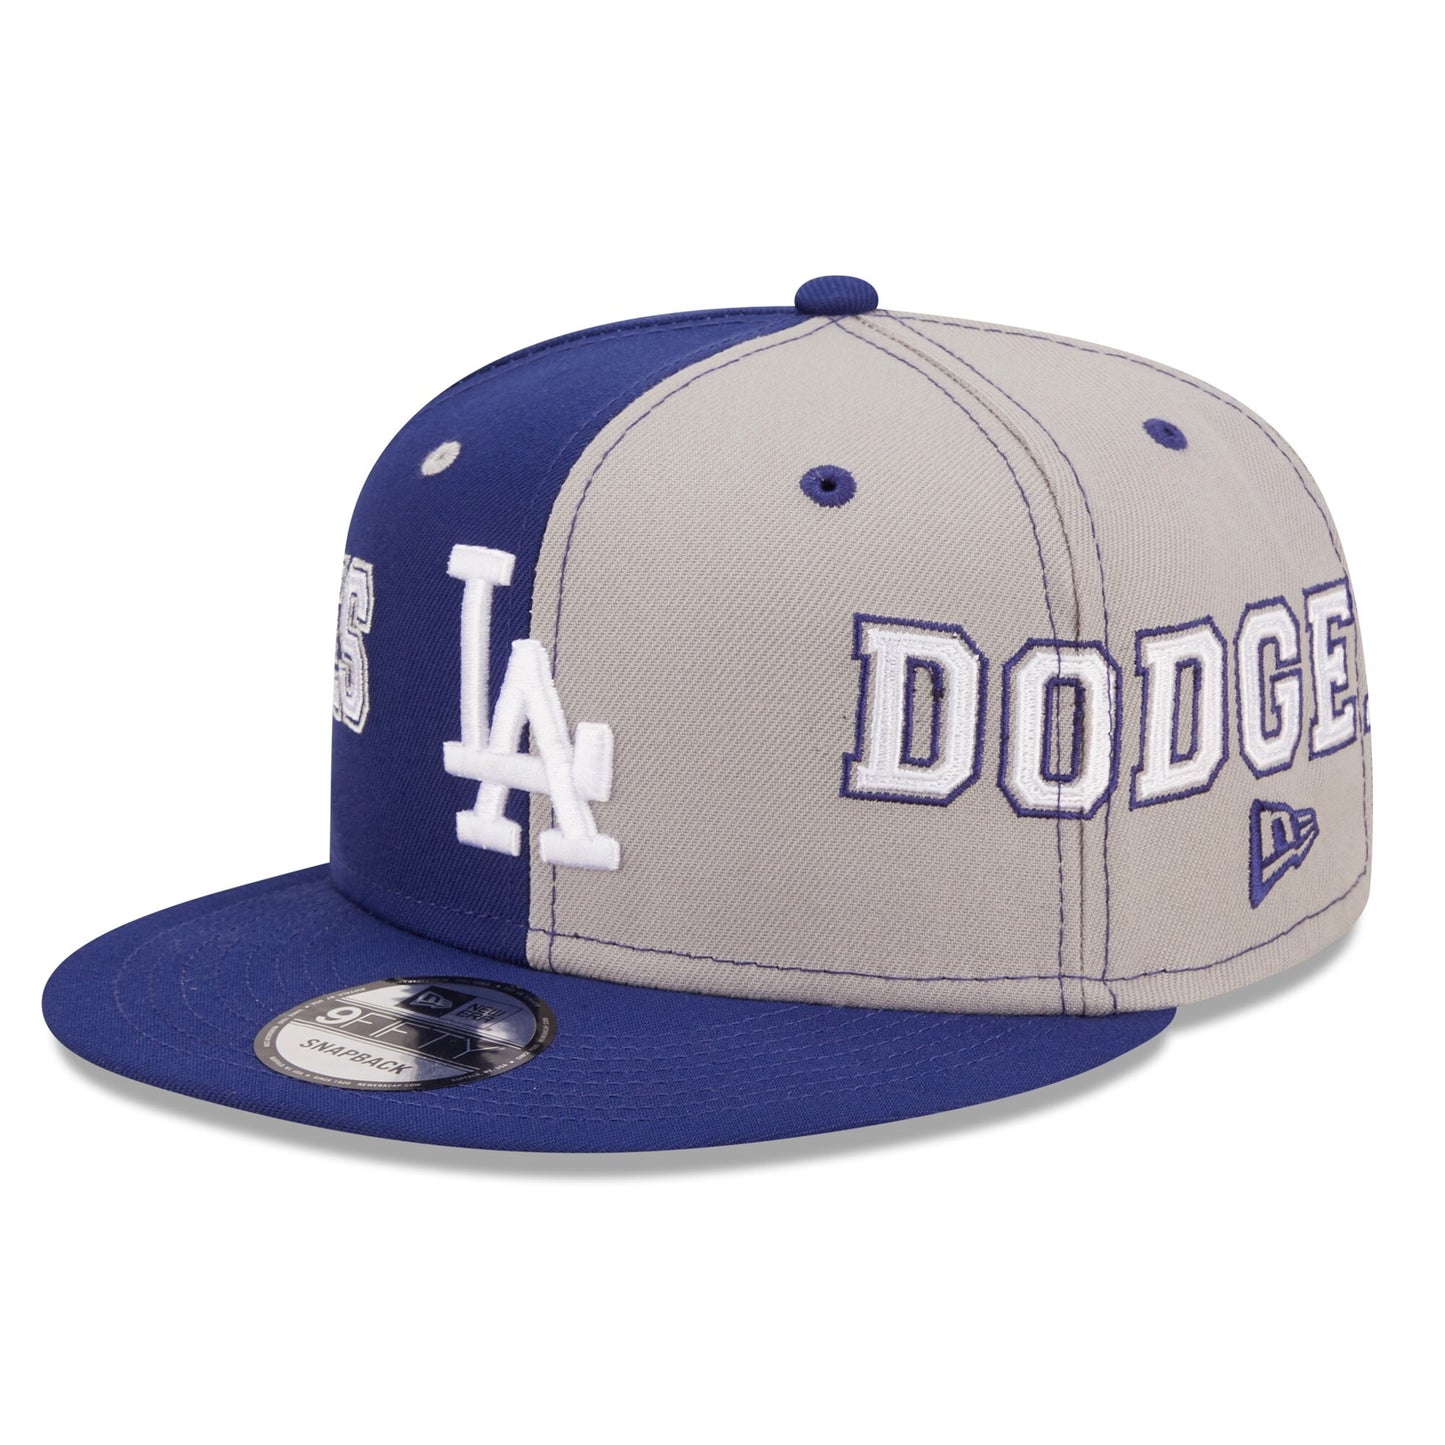 Los Angeles Dodgers New Era Team Split 9FIFTY Snapback Hat - Royal/Gray